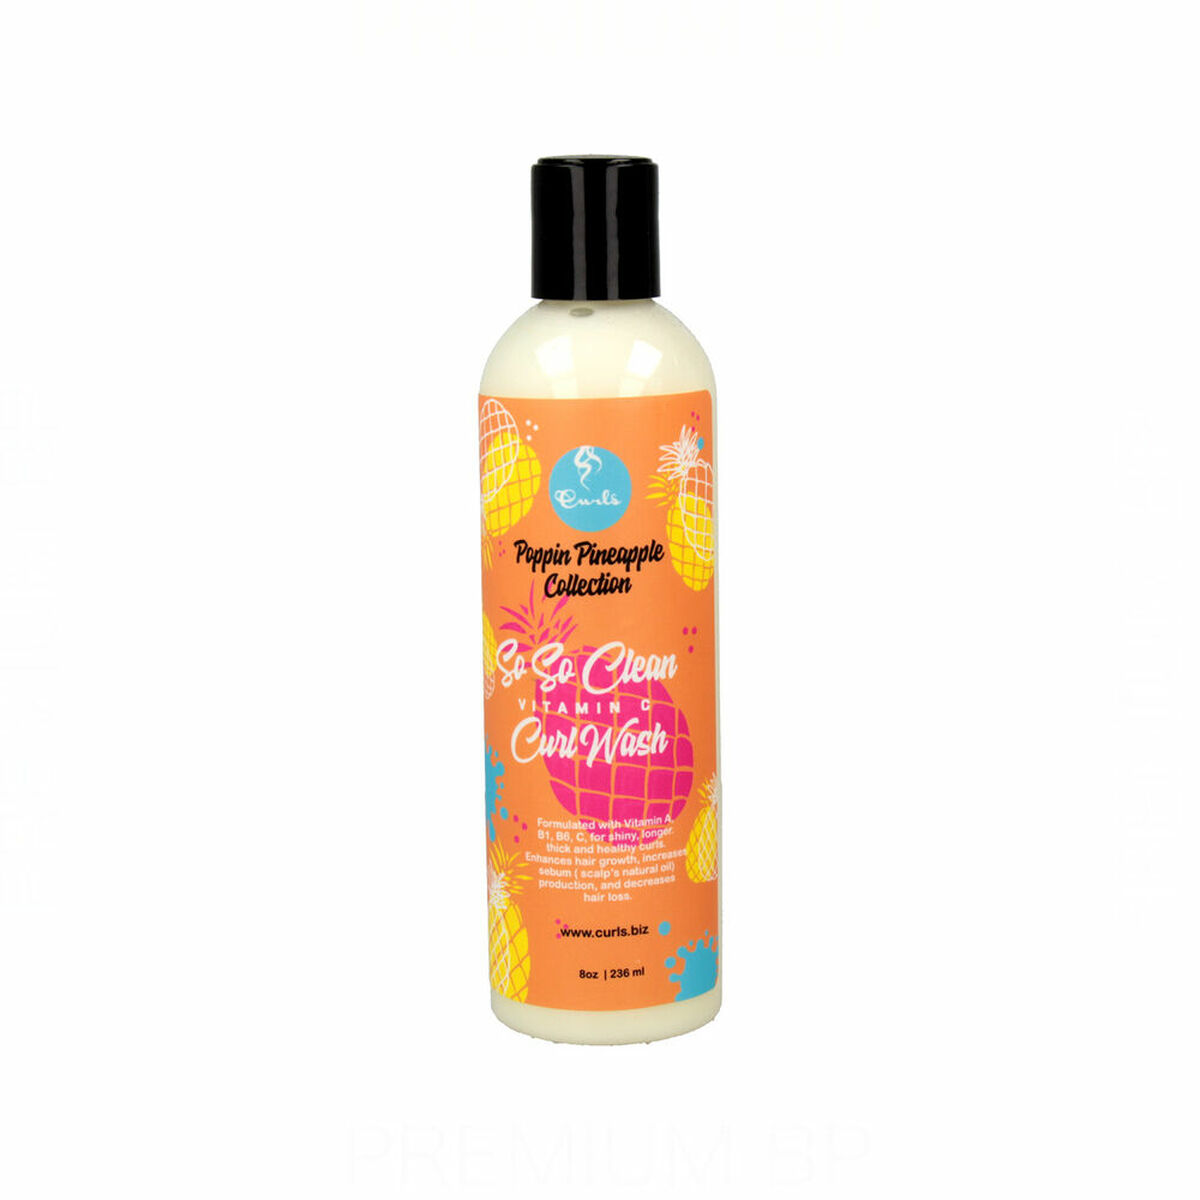 Curls - Curls | Acondicionador Curls Poppin Pineapple Collection So So Clean Curl Wash (236 ml) | Maquillajes | BB